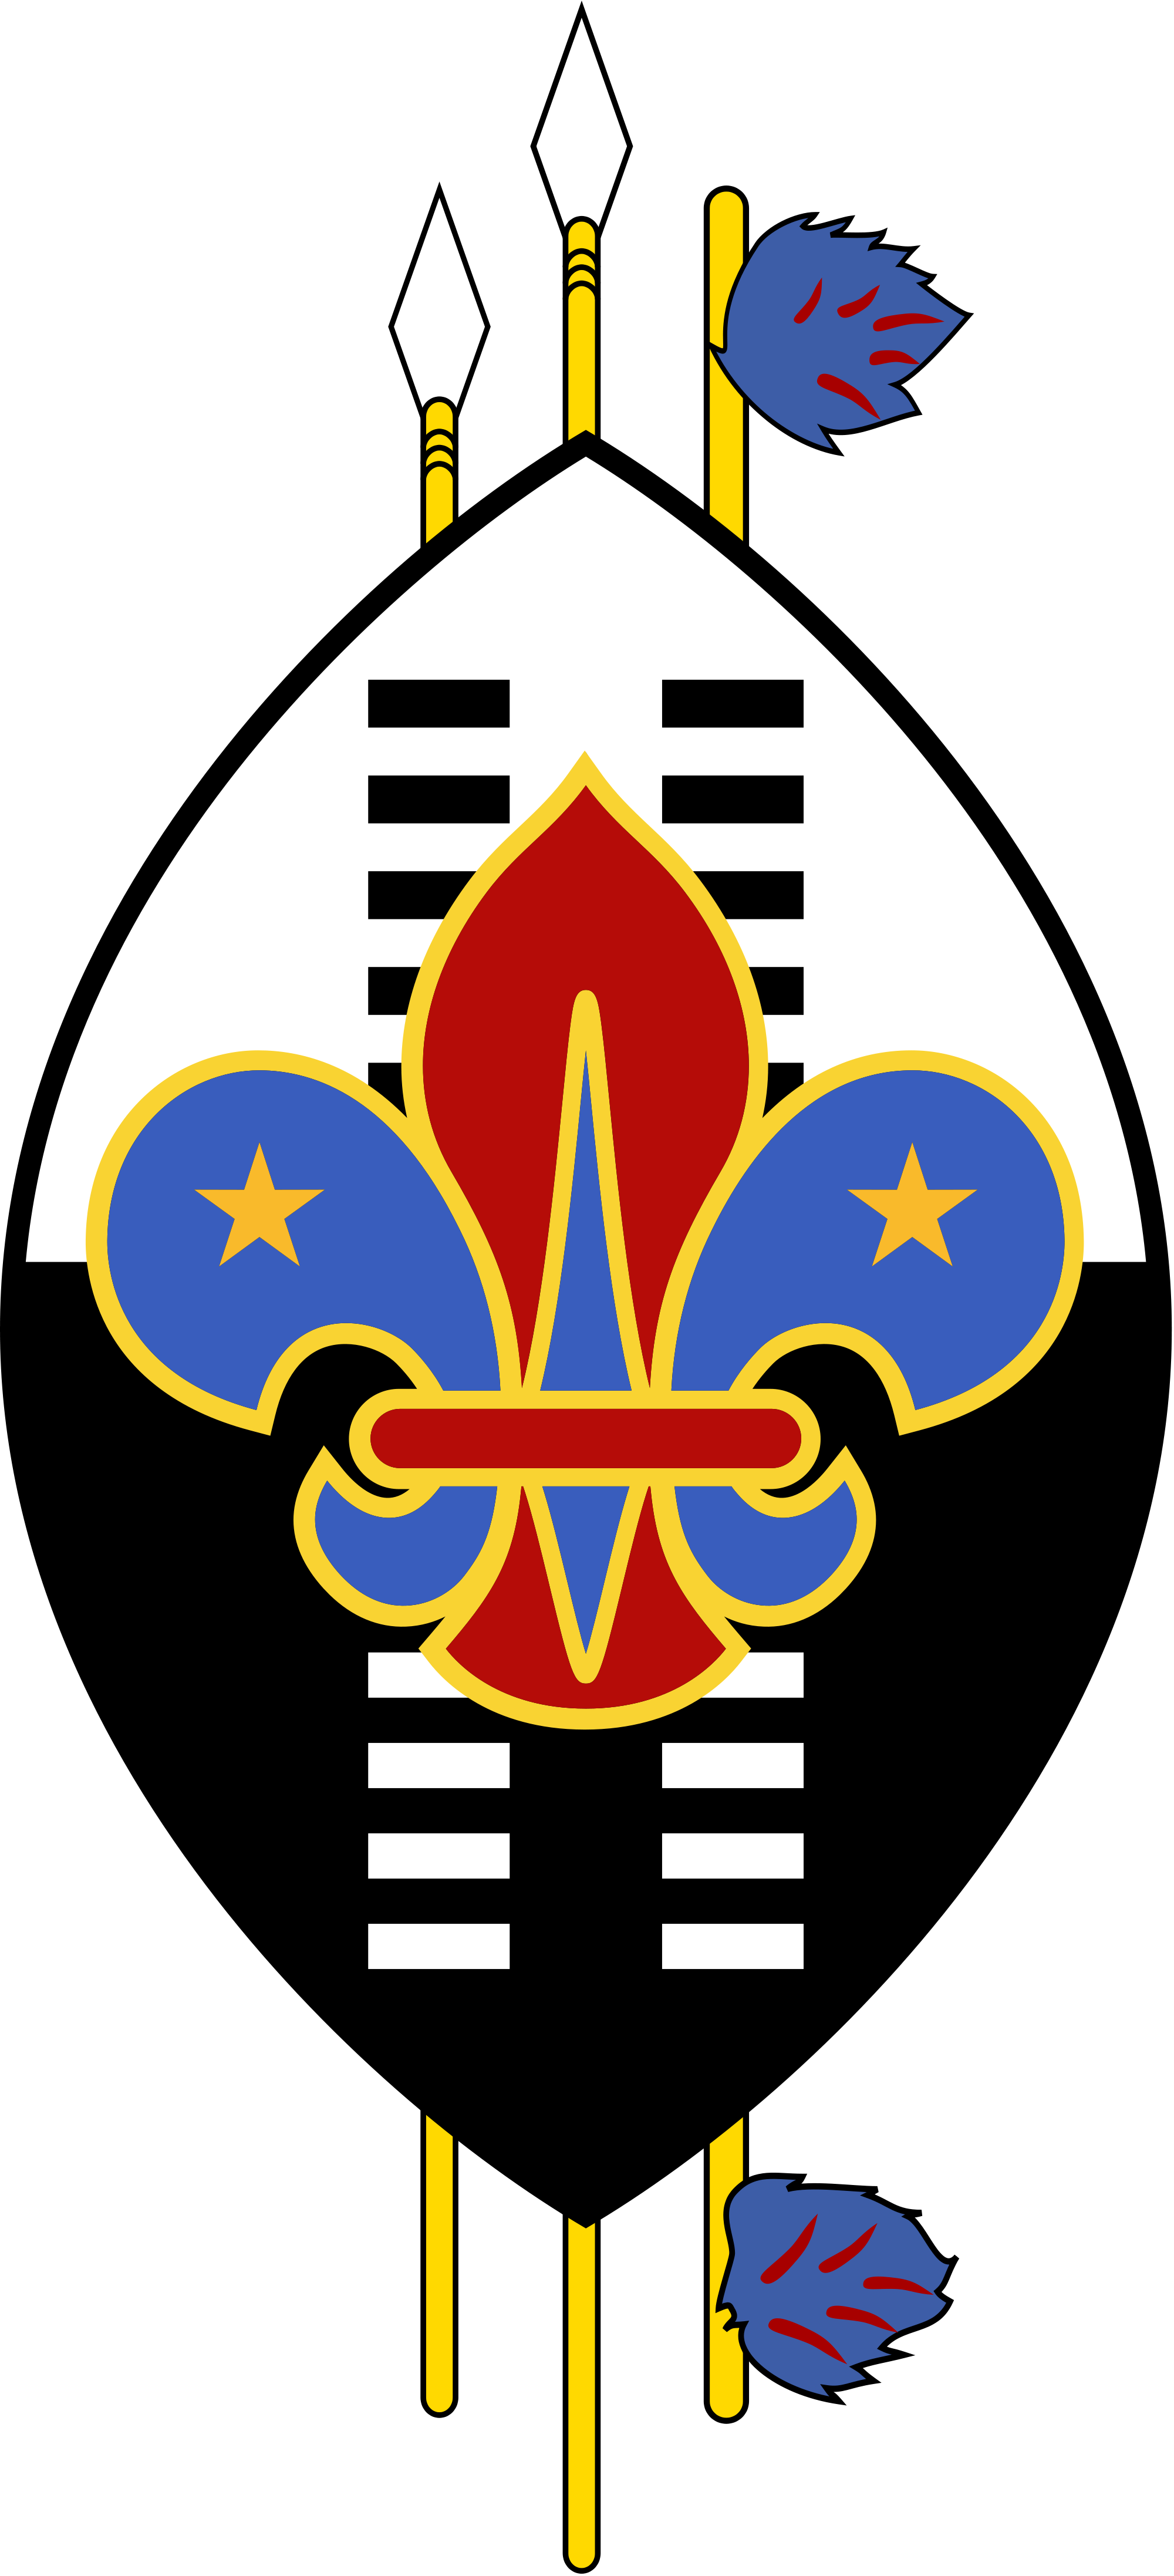 Fileswaziland Boy Scouts Association - Nigeria Boys Scouts (2000x4388)